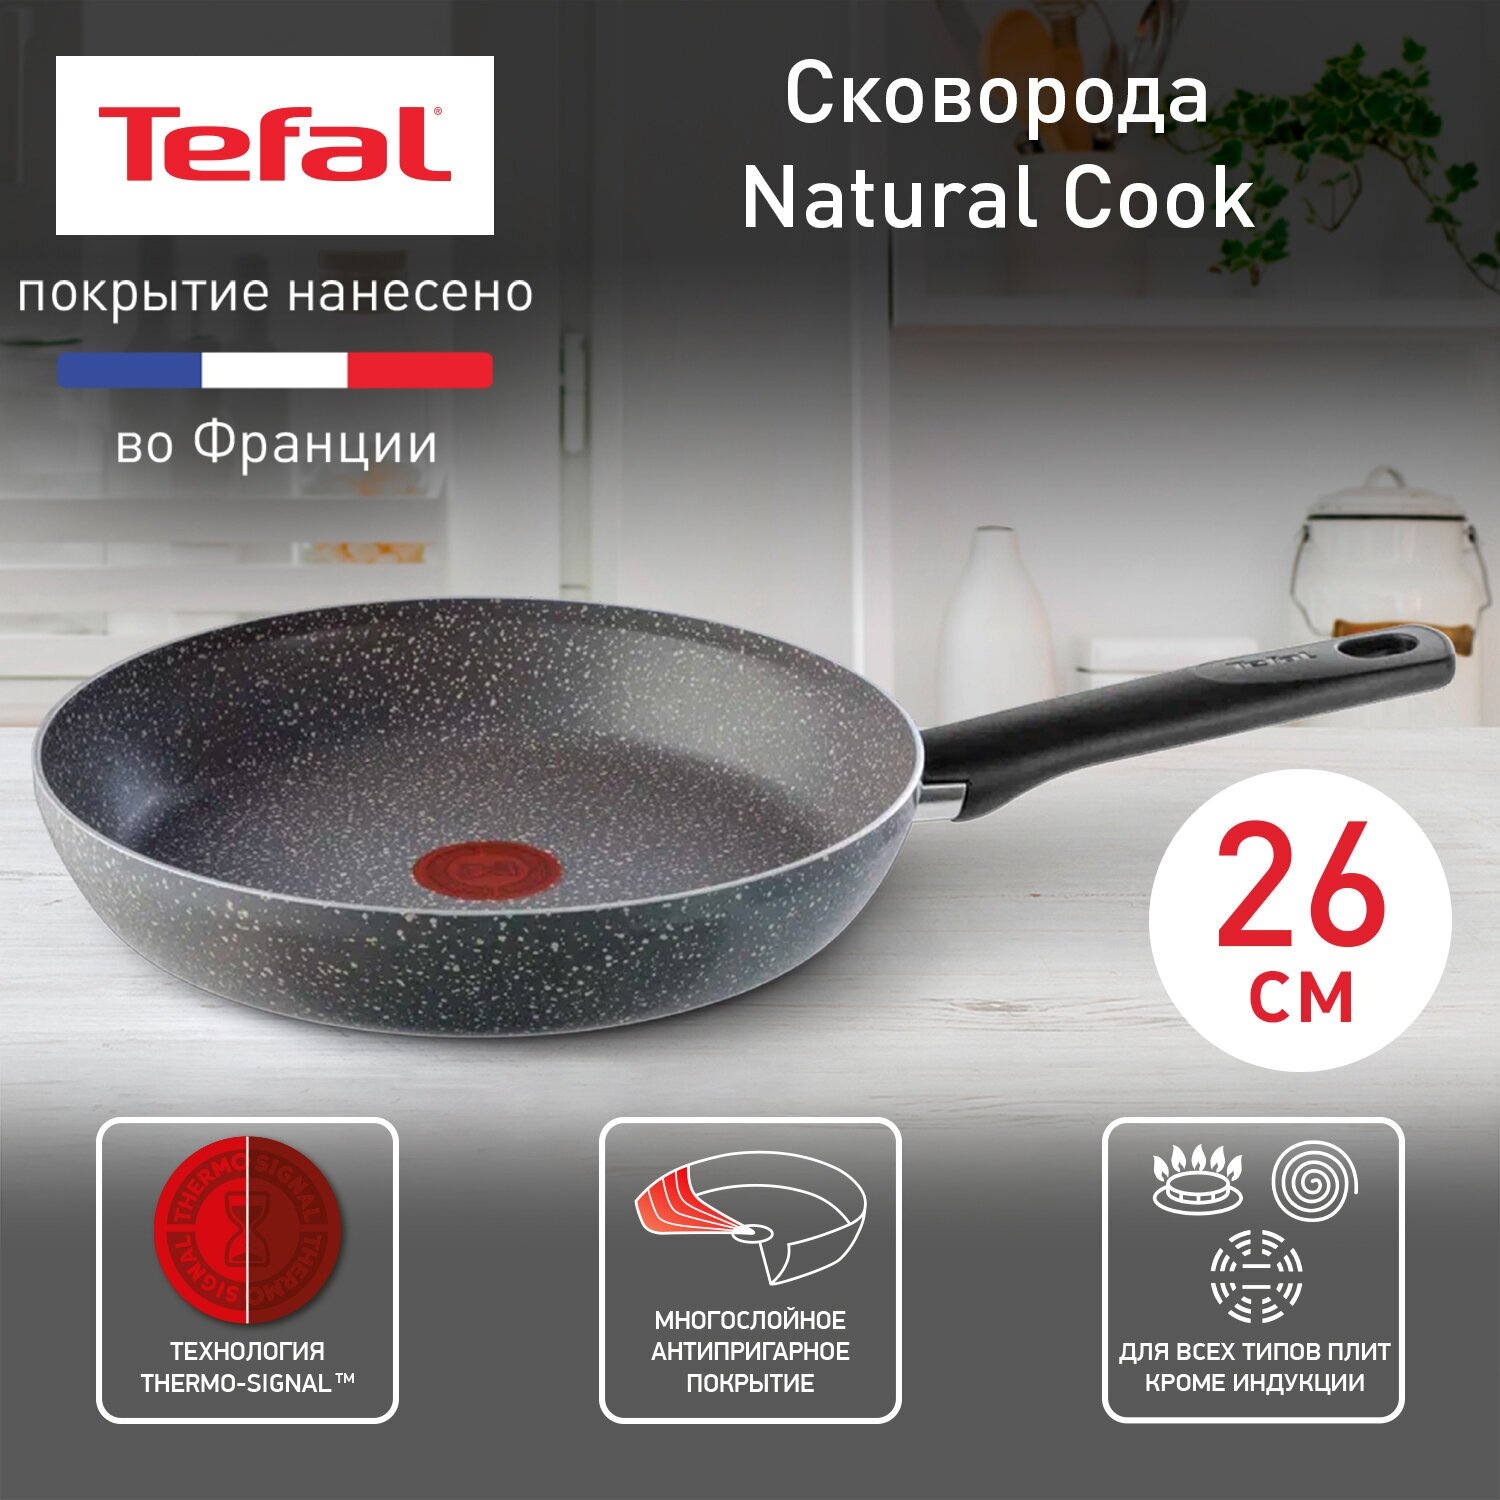 Сковорода Tefal Natural Cook 26 см 04211126